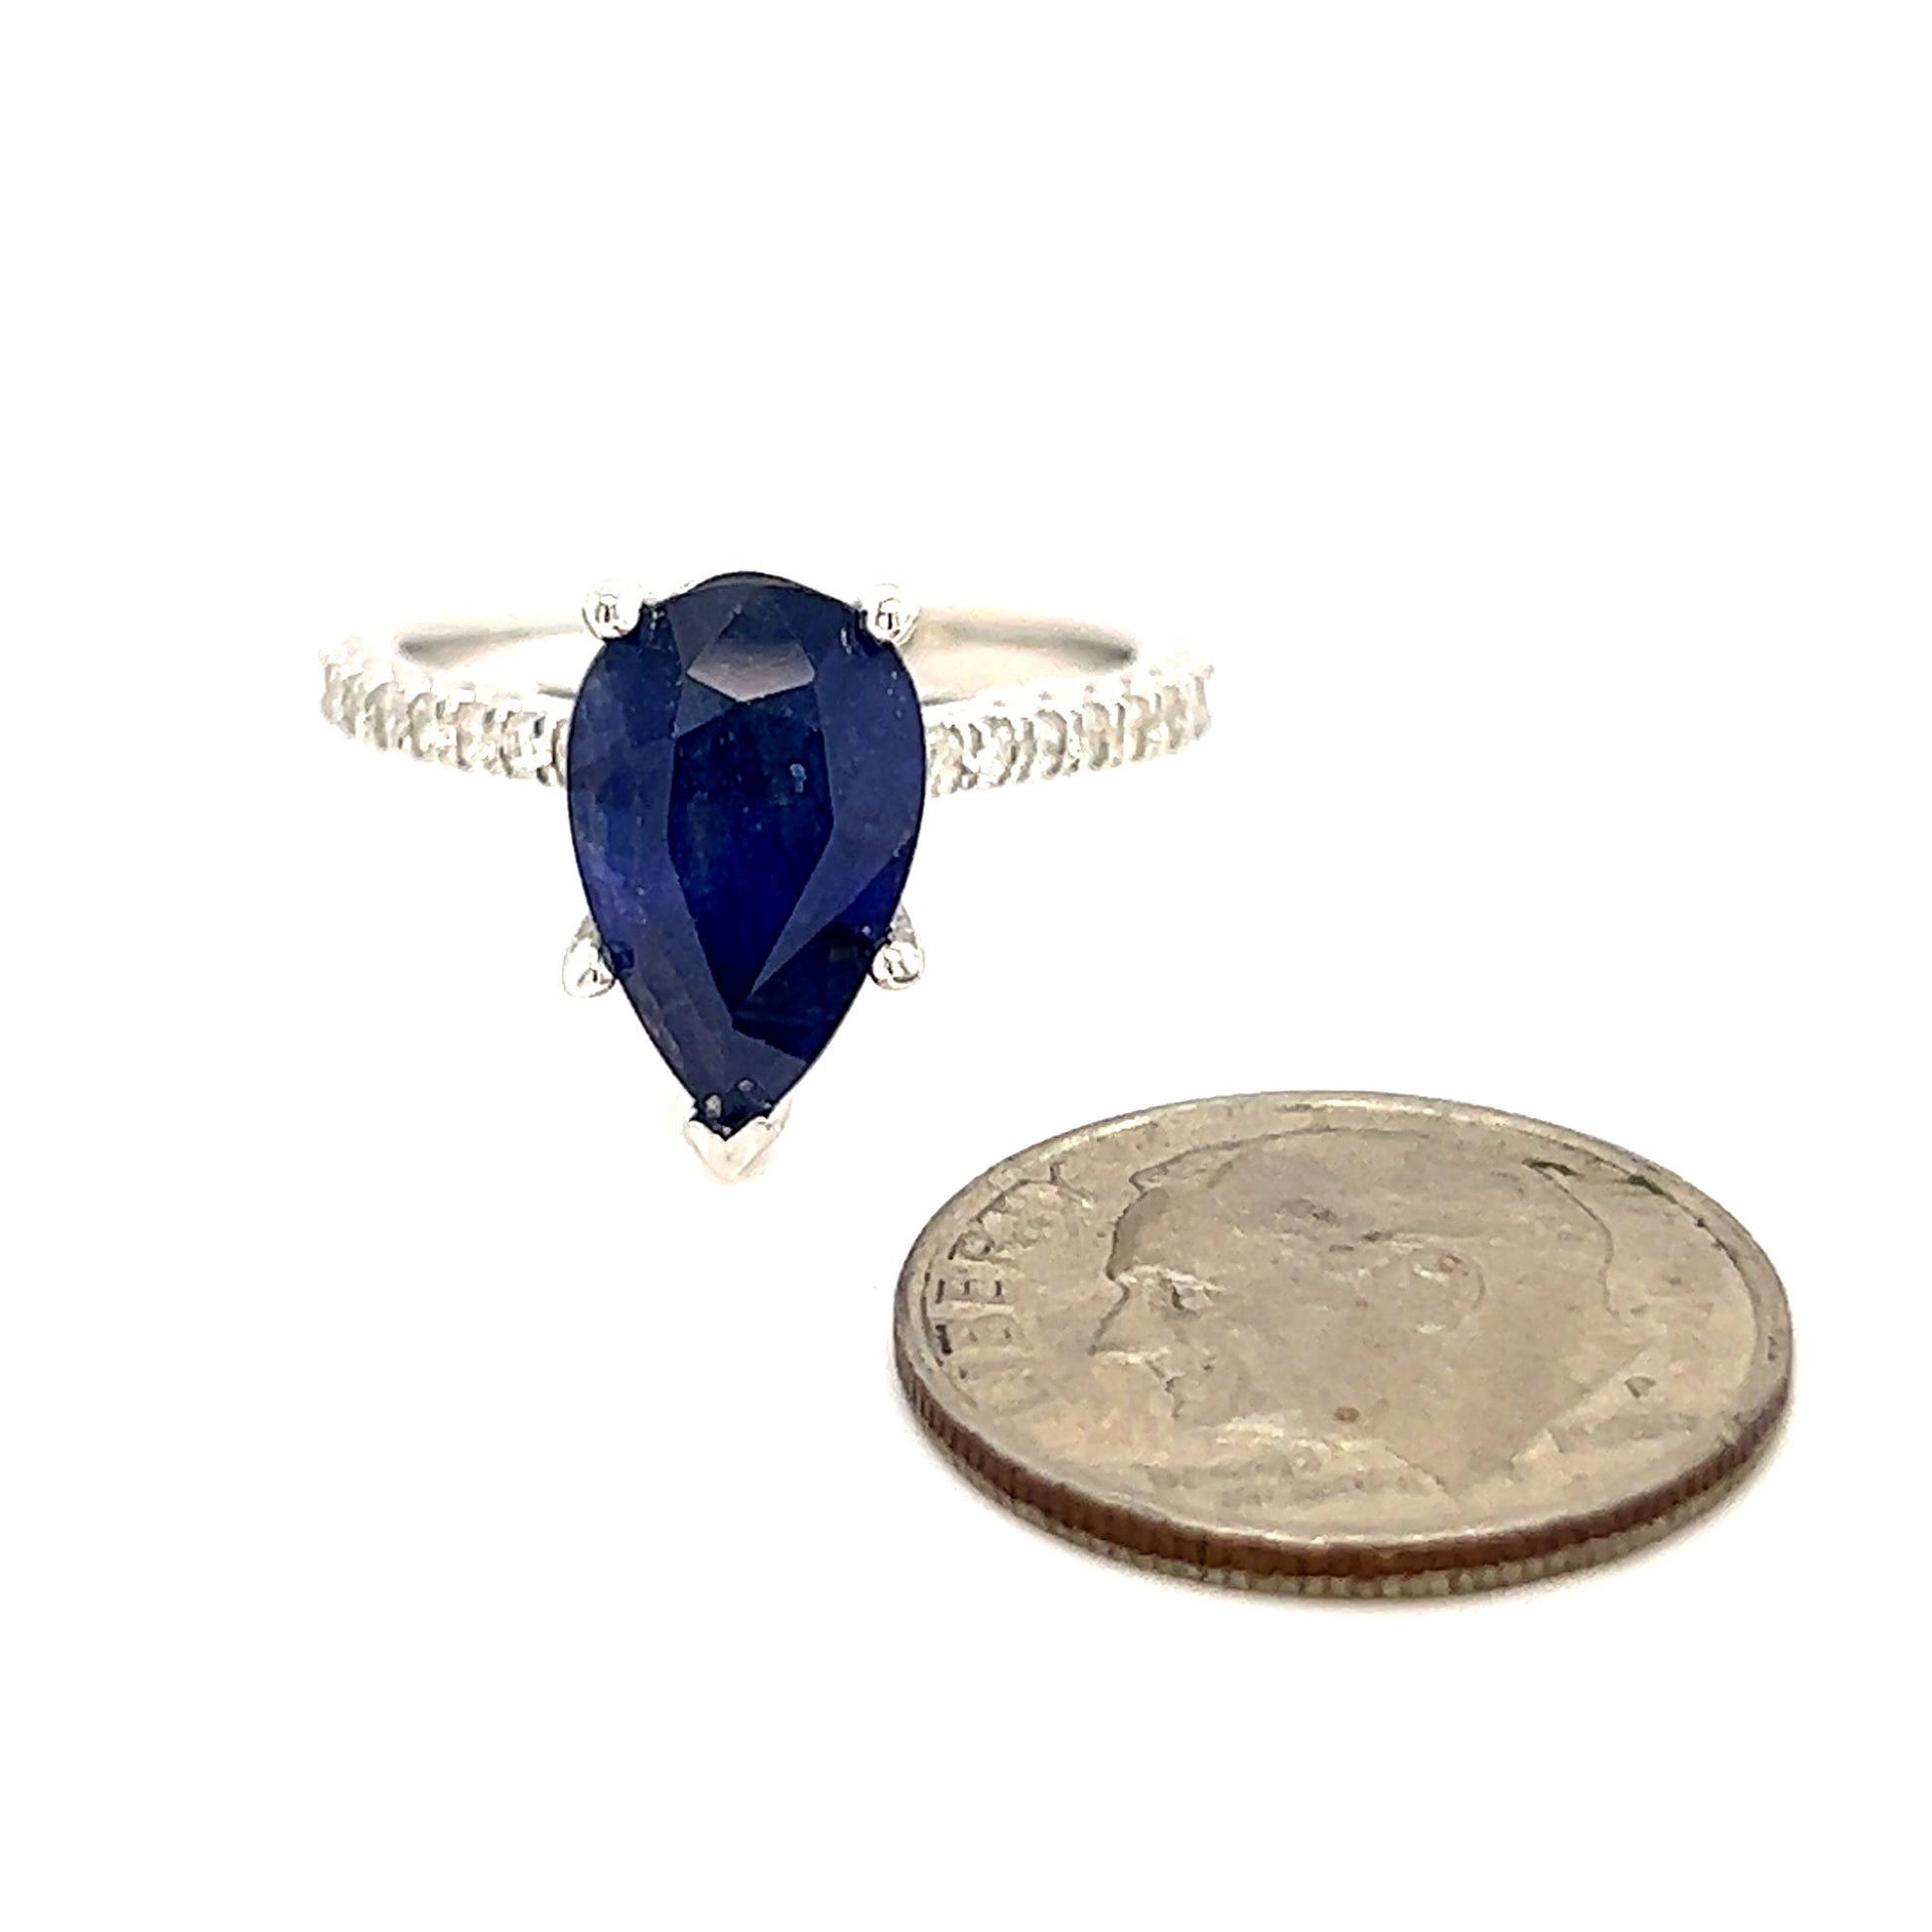 Sapphire Diamond Ring Size 6.5 14k Gold 3.31 TCW Certified $2,895 215411 - Certified Fine Jewelry